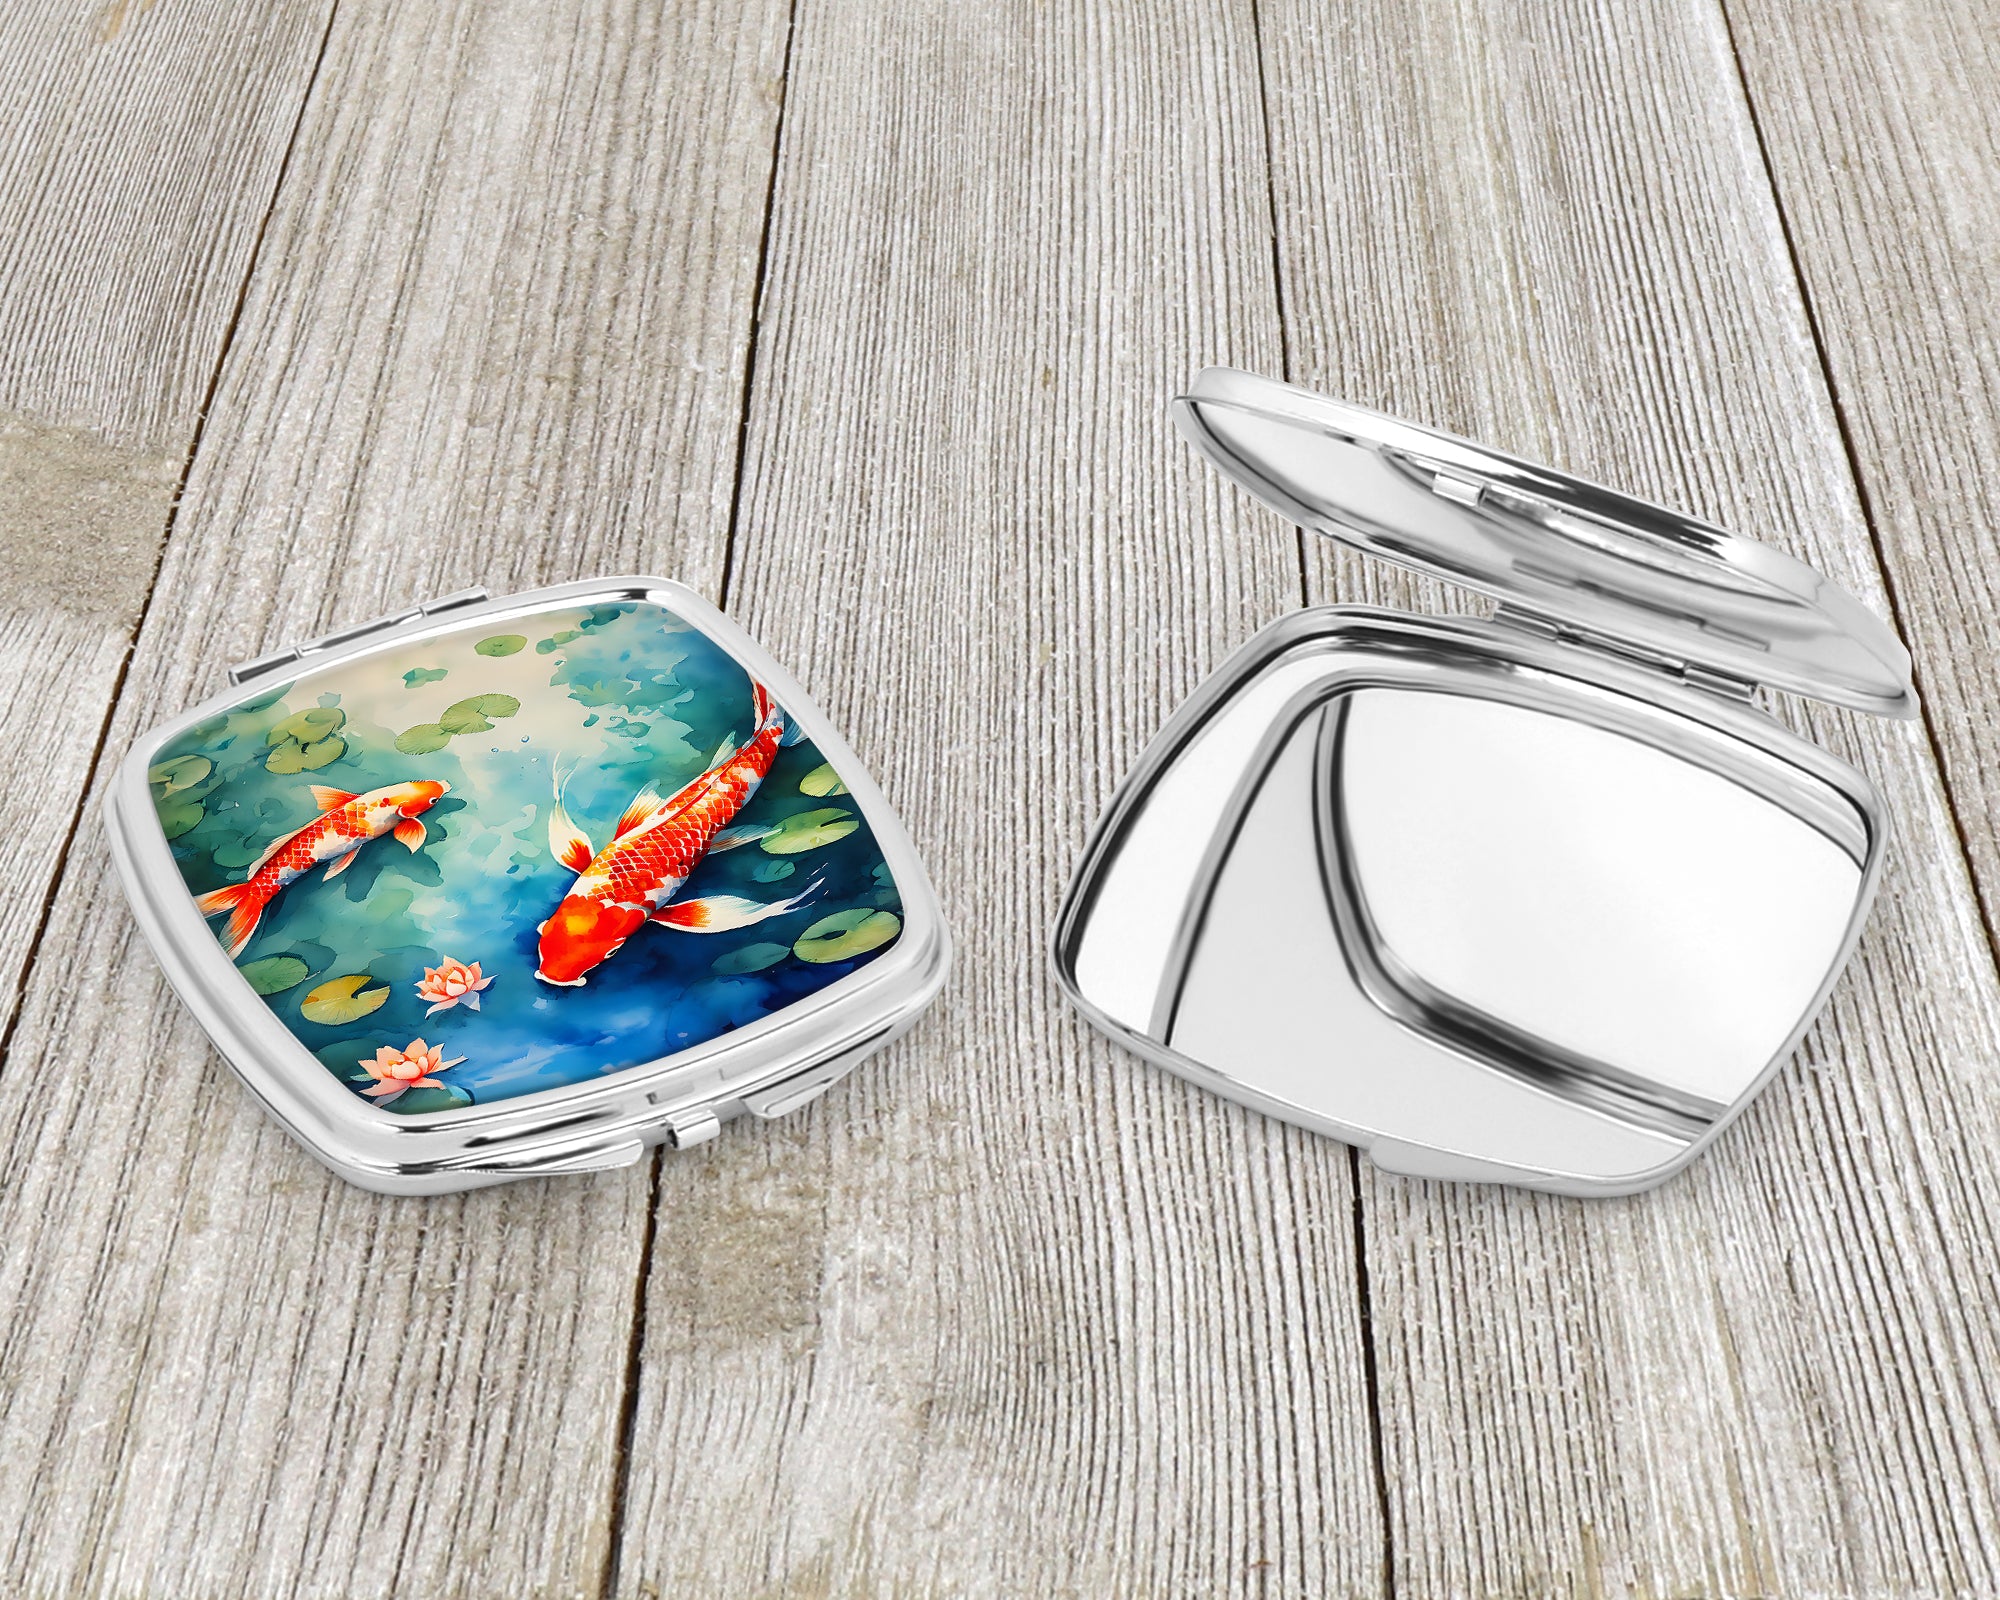 Koi Fish Compact Mirror